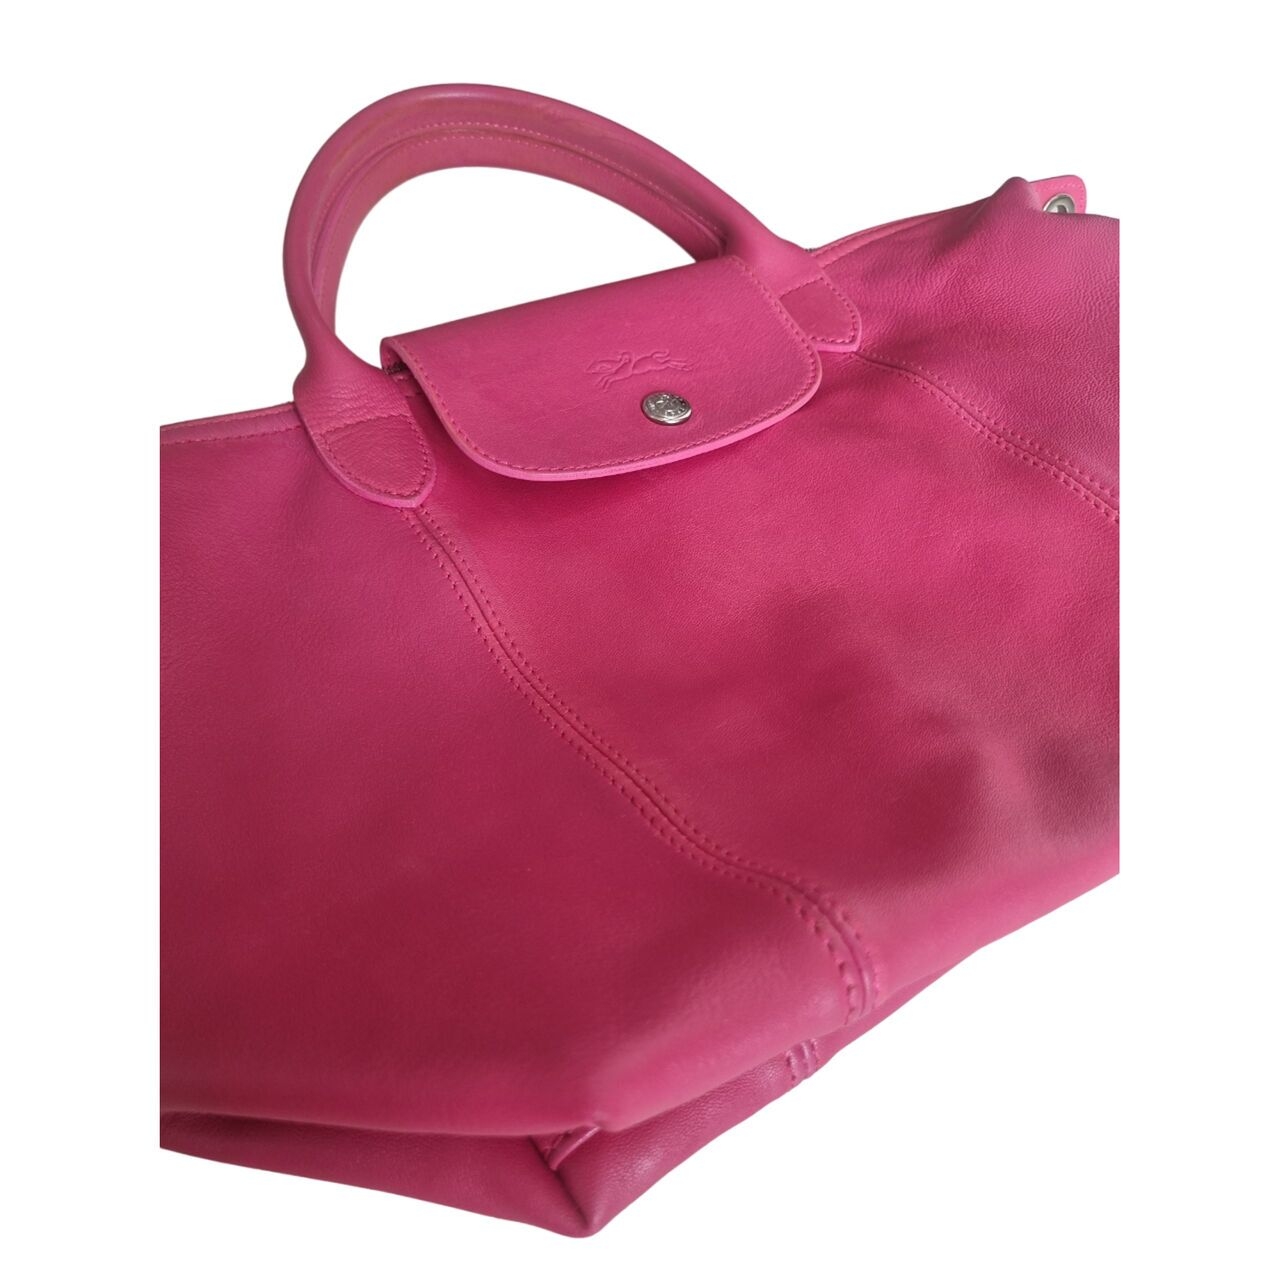 Longchamp Le Pliage Cuir Leather Small Pink Rose Handbag